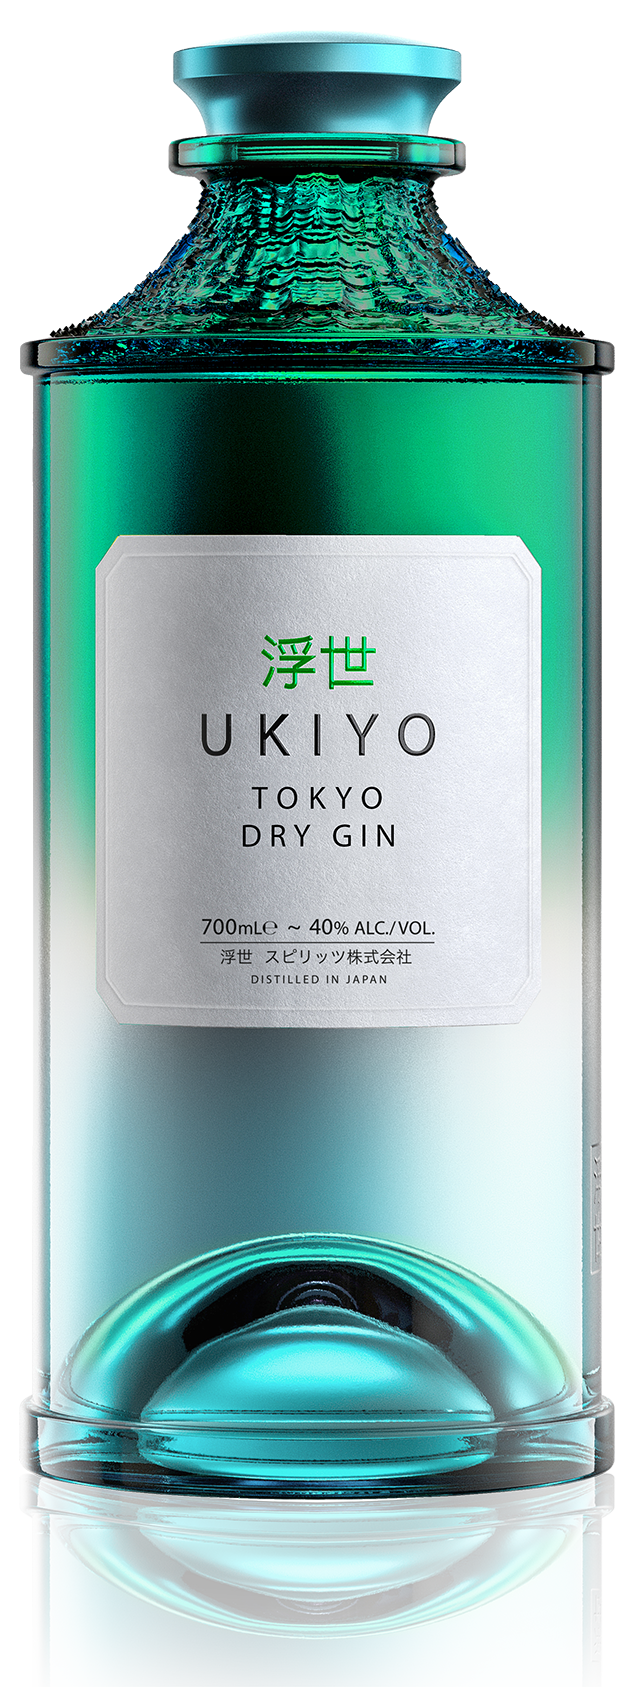 UKIYO Toyko Dry Gin